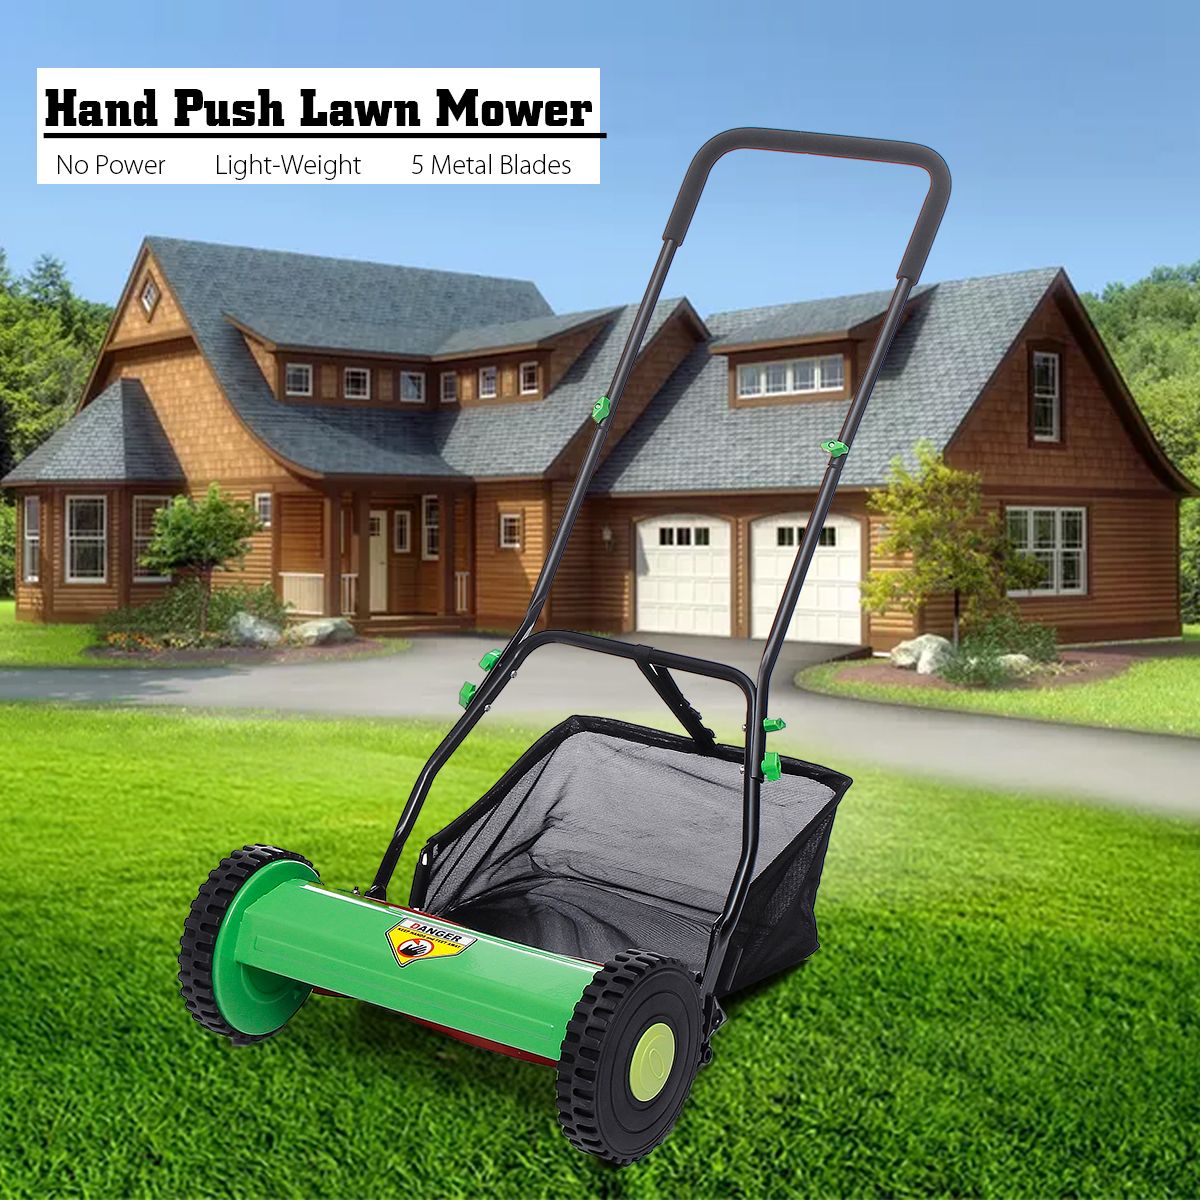 25L-Compact-Hand-Push-Lawn-Mower-Courtyard-Home-Reel-Mower-No-Power-Lawnmower-1535625